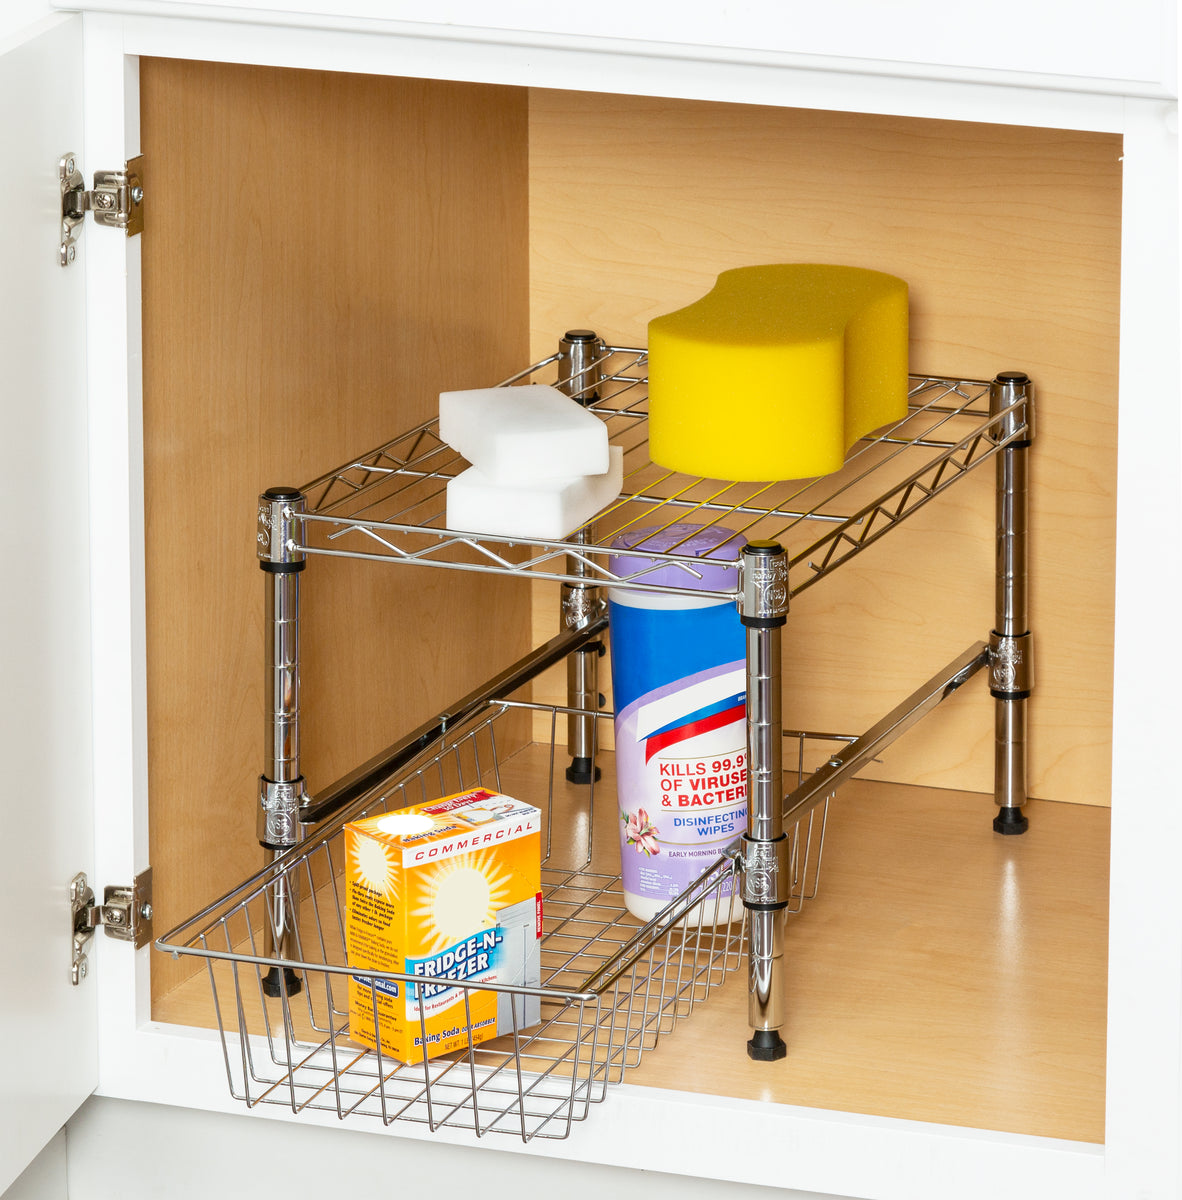 Chrome Large Cabinet Organizer with Basket and Adjustable Shelf